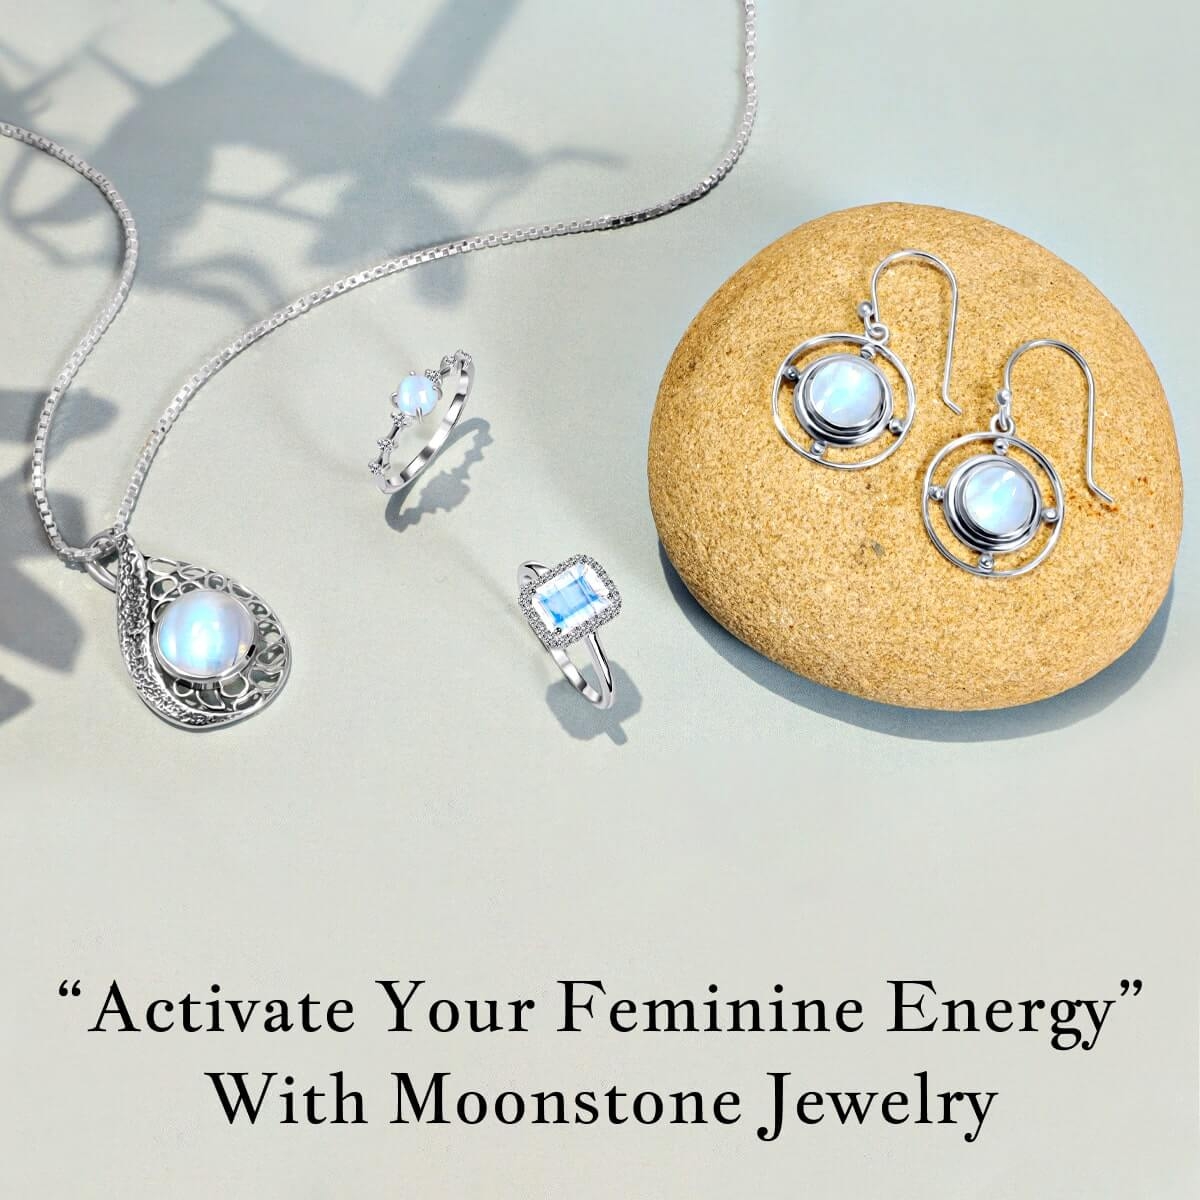 Uses of Moonstone Jewelry